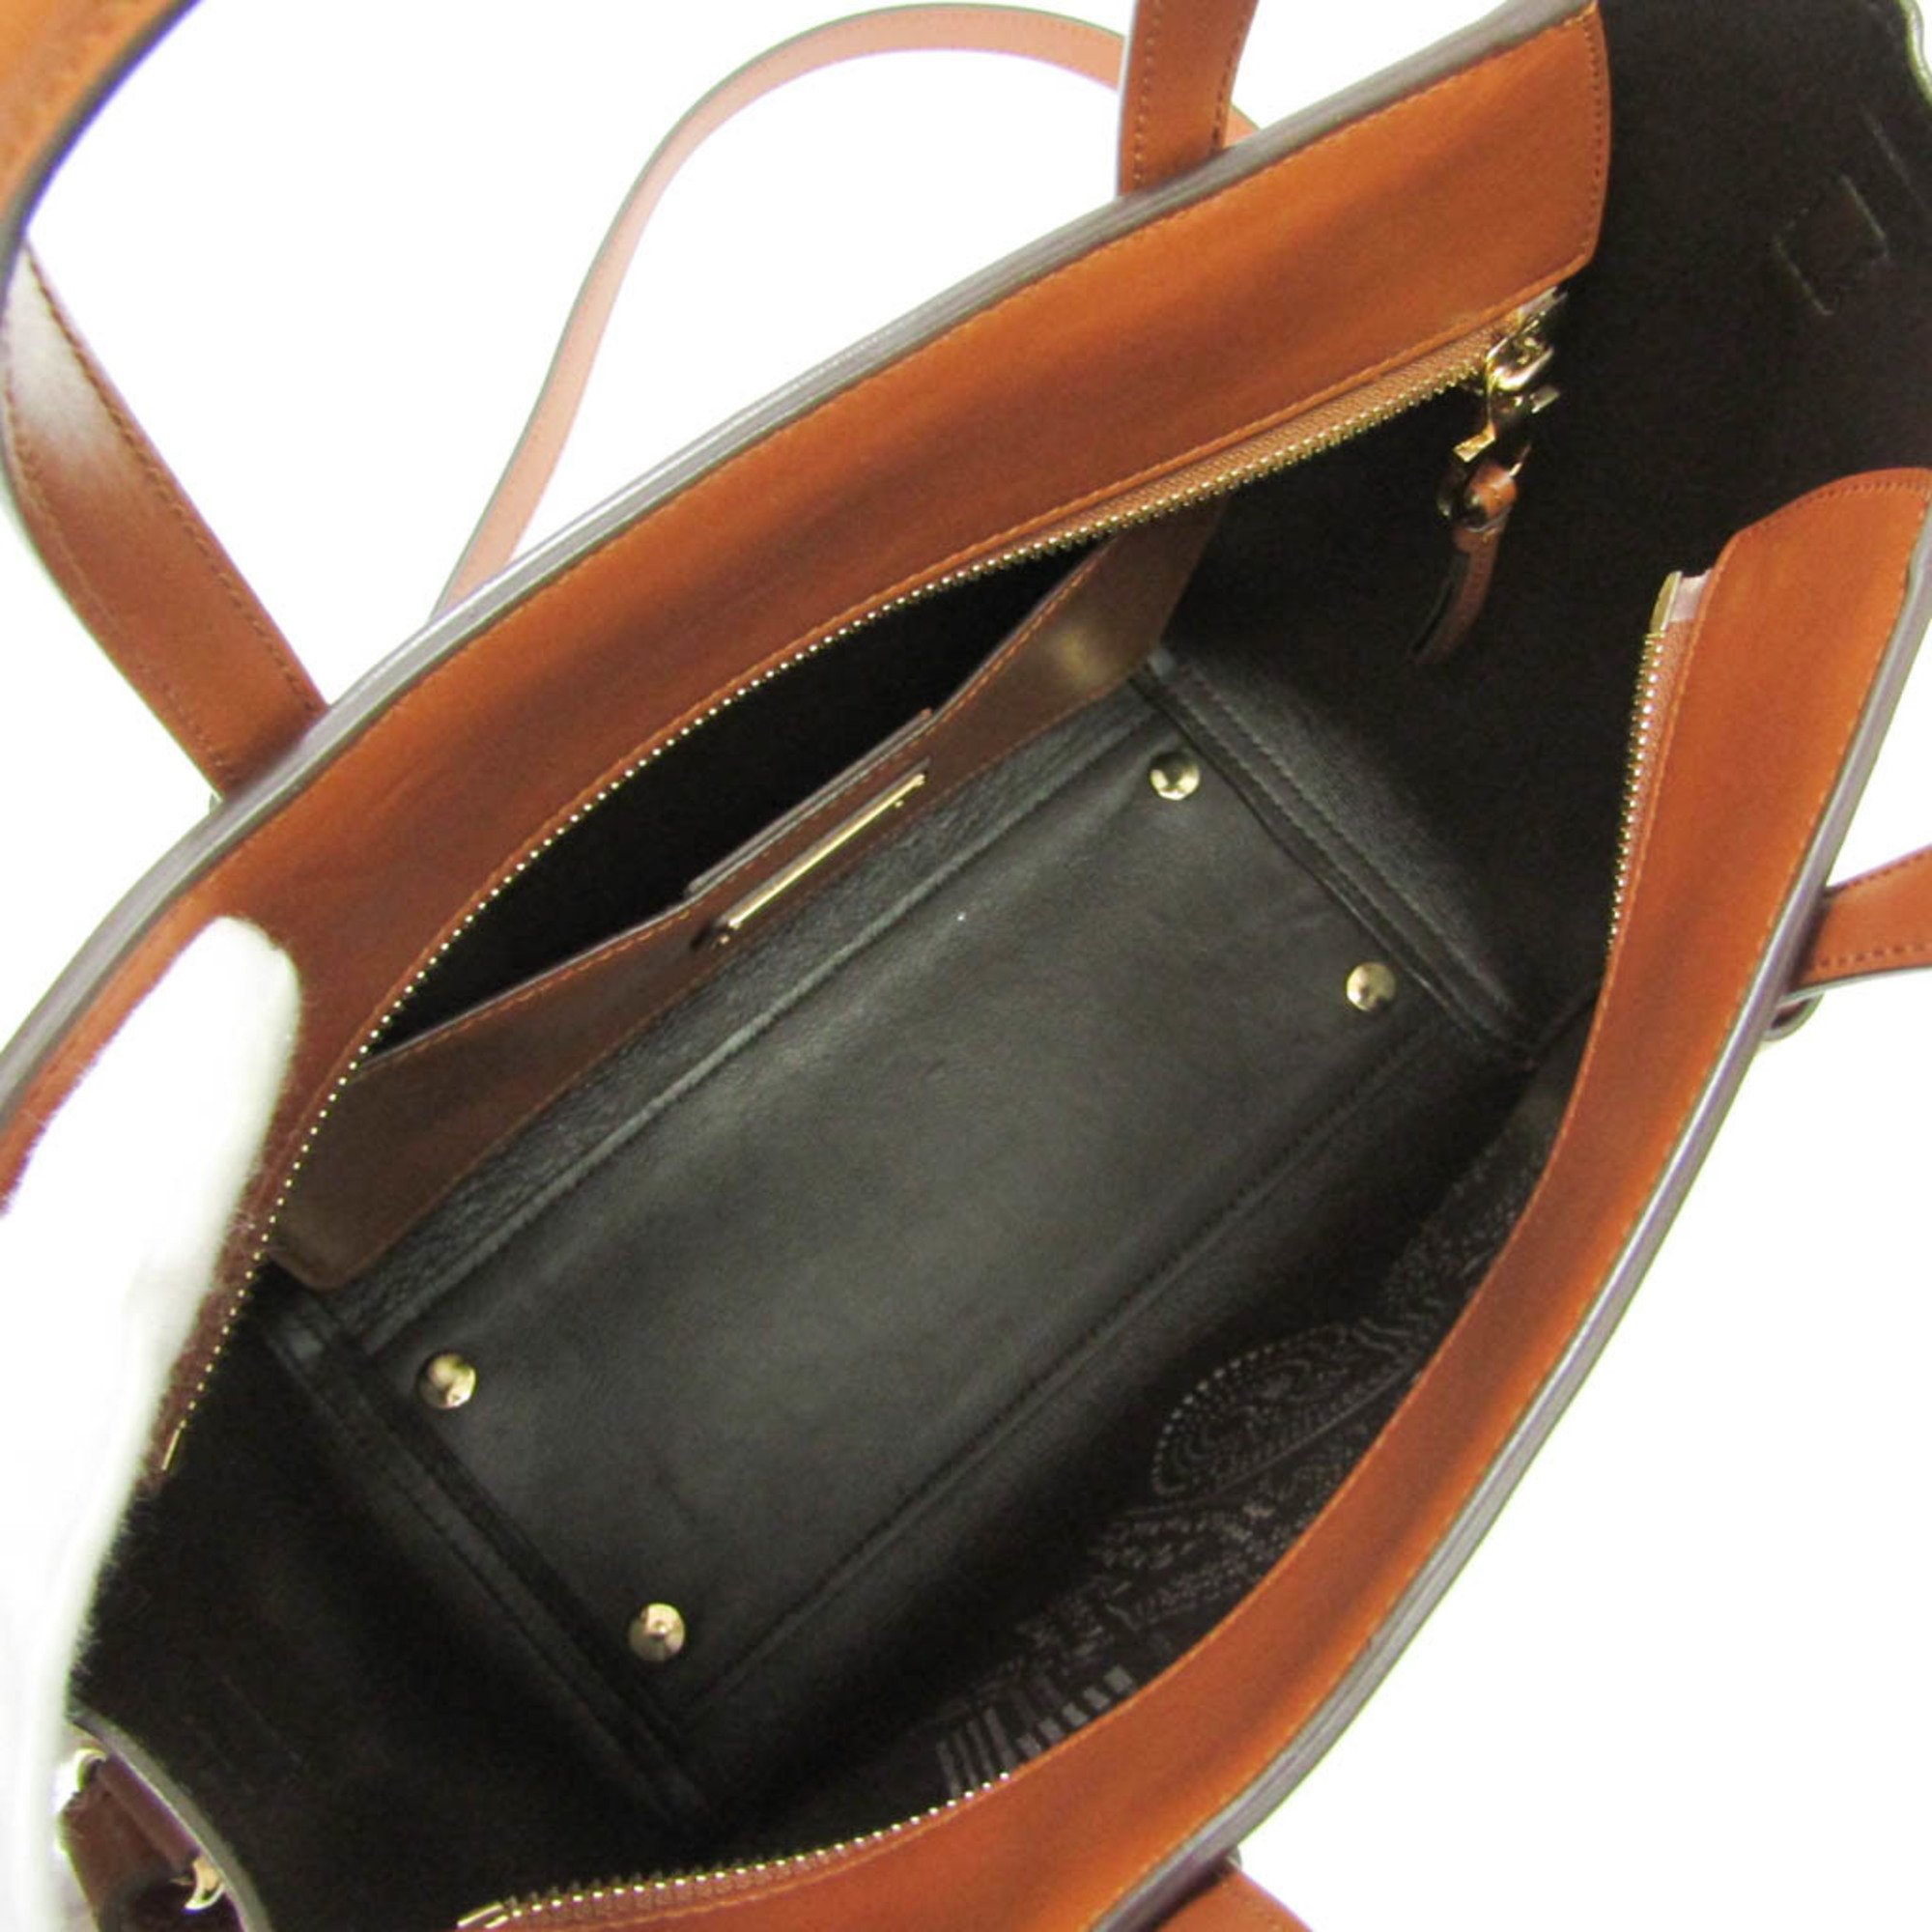 Salvatore Ferragamo BONNIE LEATHER MEDIUM NEUTRAL TOTE RE-21G264 Women's Leather Handbag,Shoulder Bag Brown